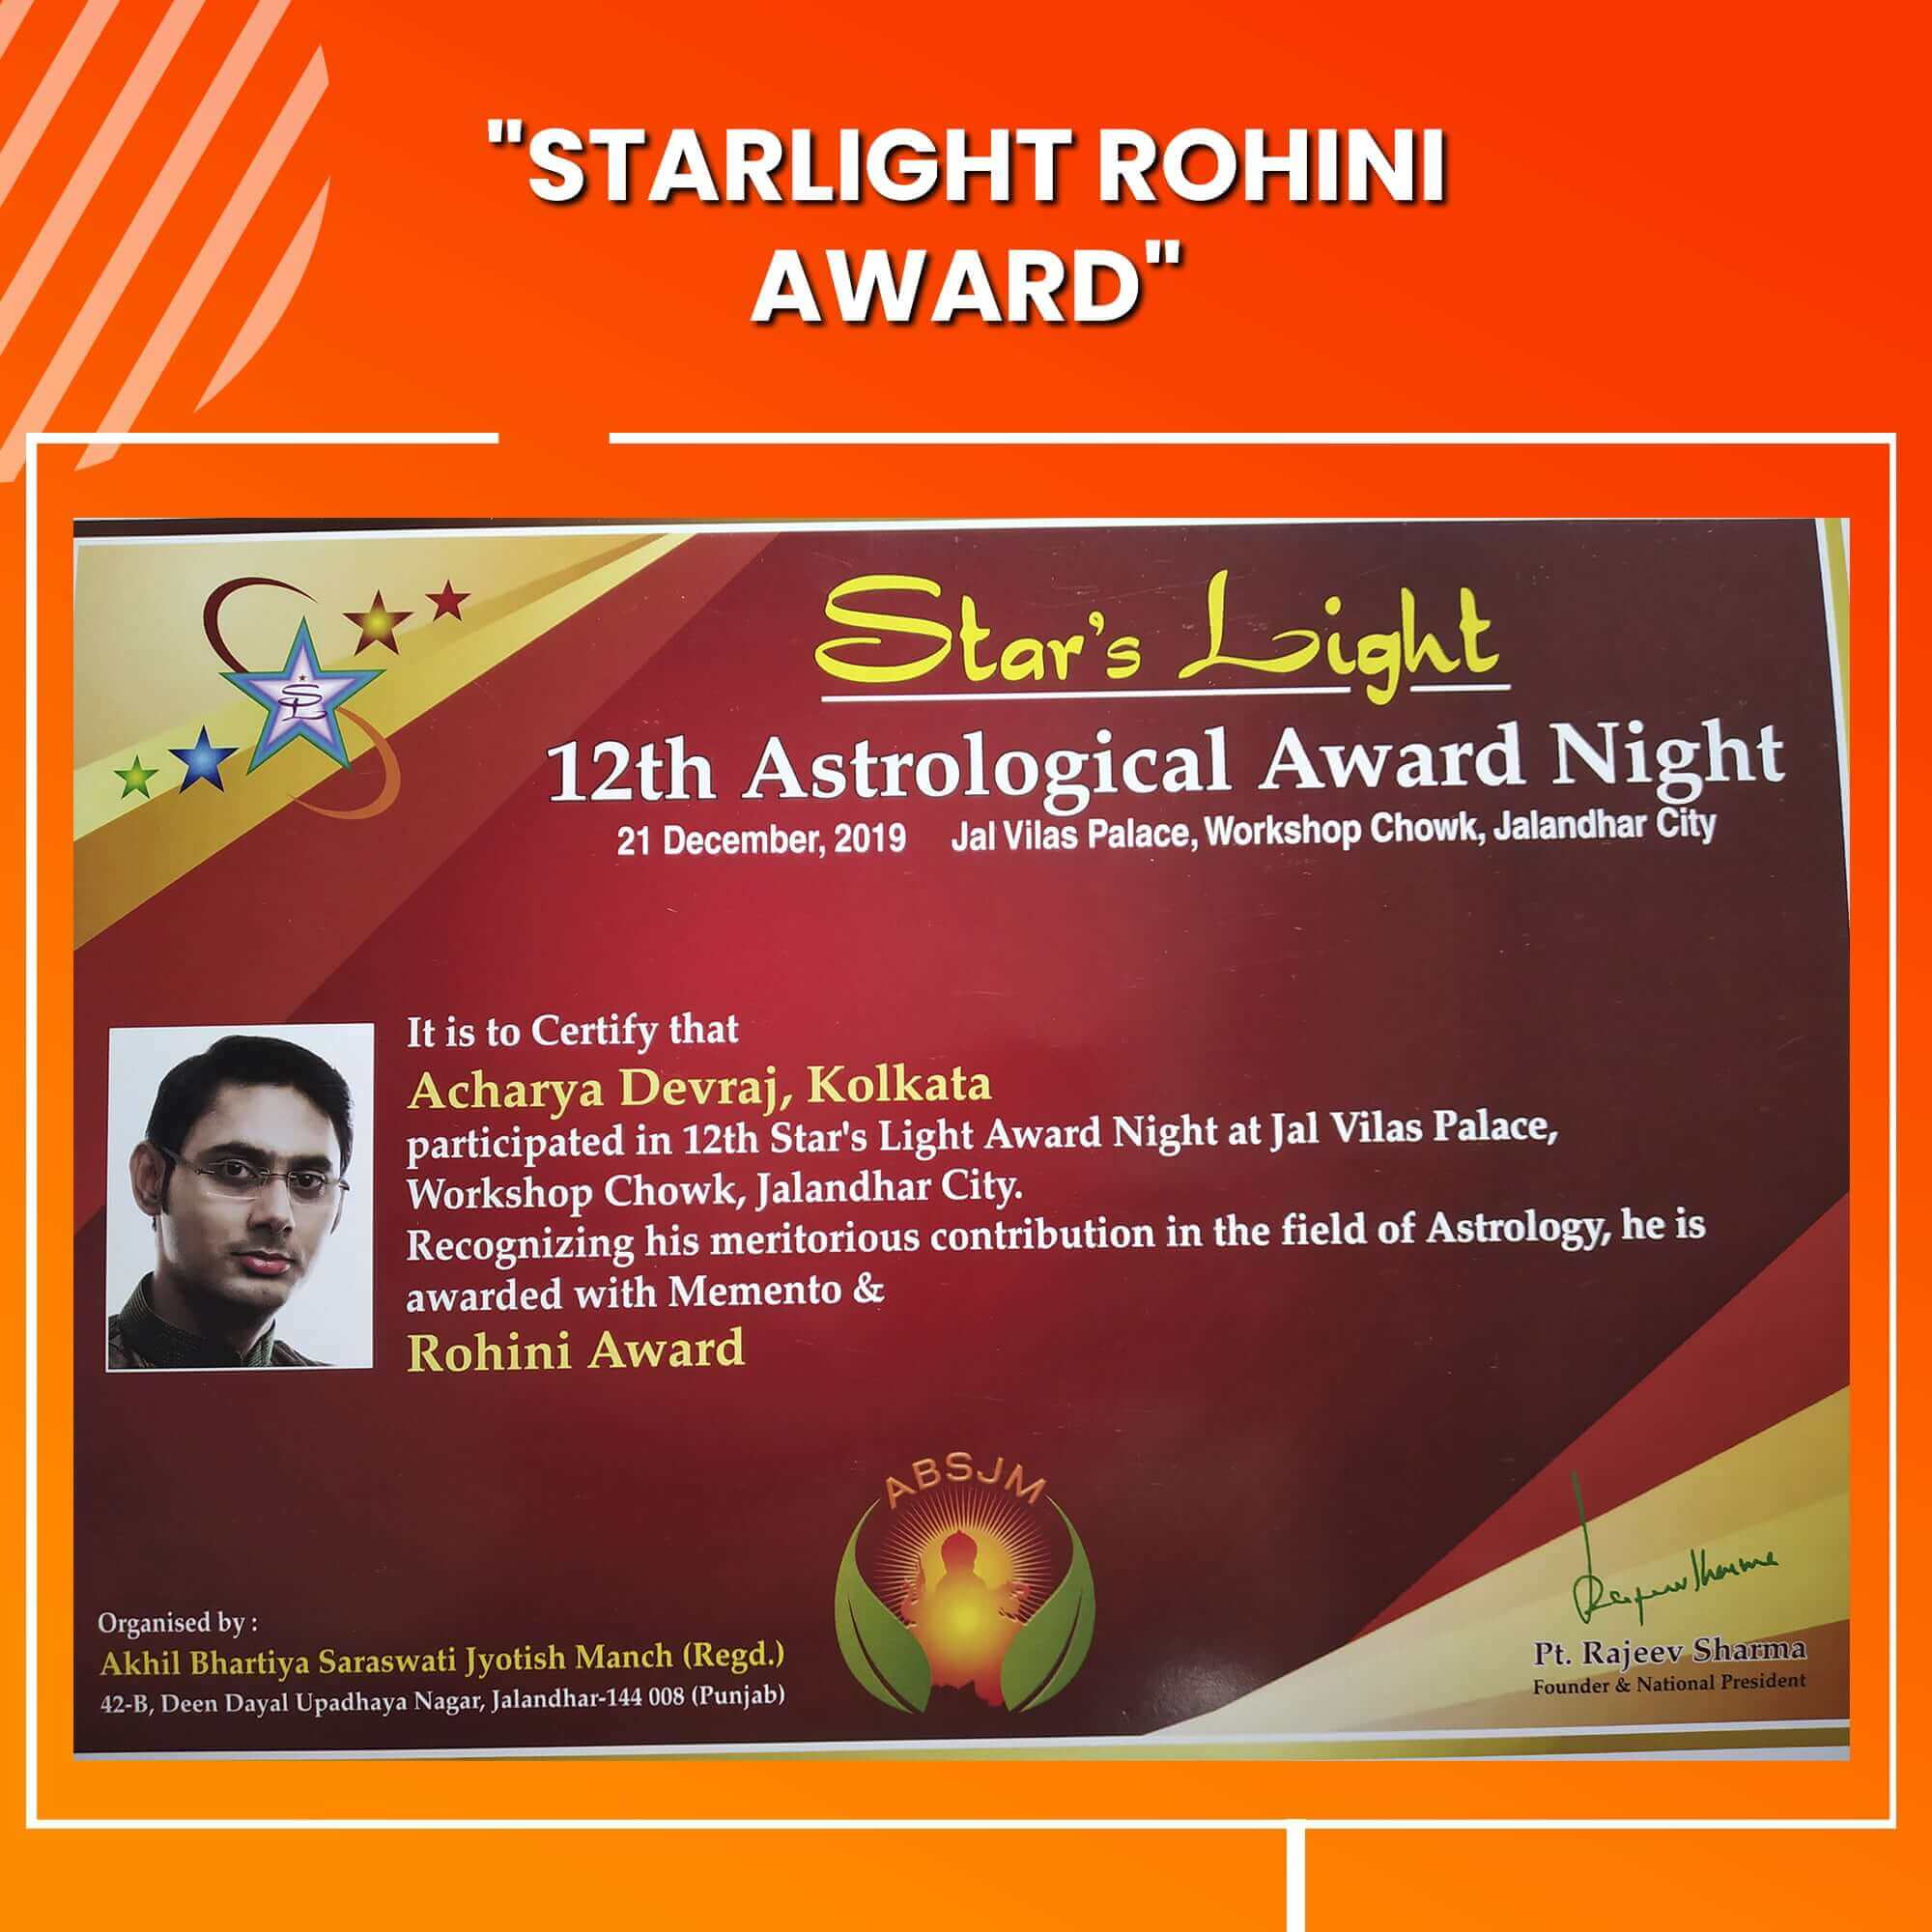 Rohini Award received by best Astrologer Debraj Acharya practice in Kolkata, Mumbai, Delhi, Bangalore